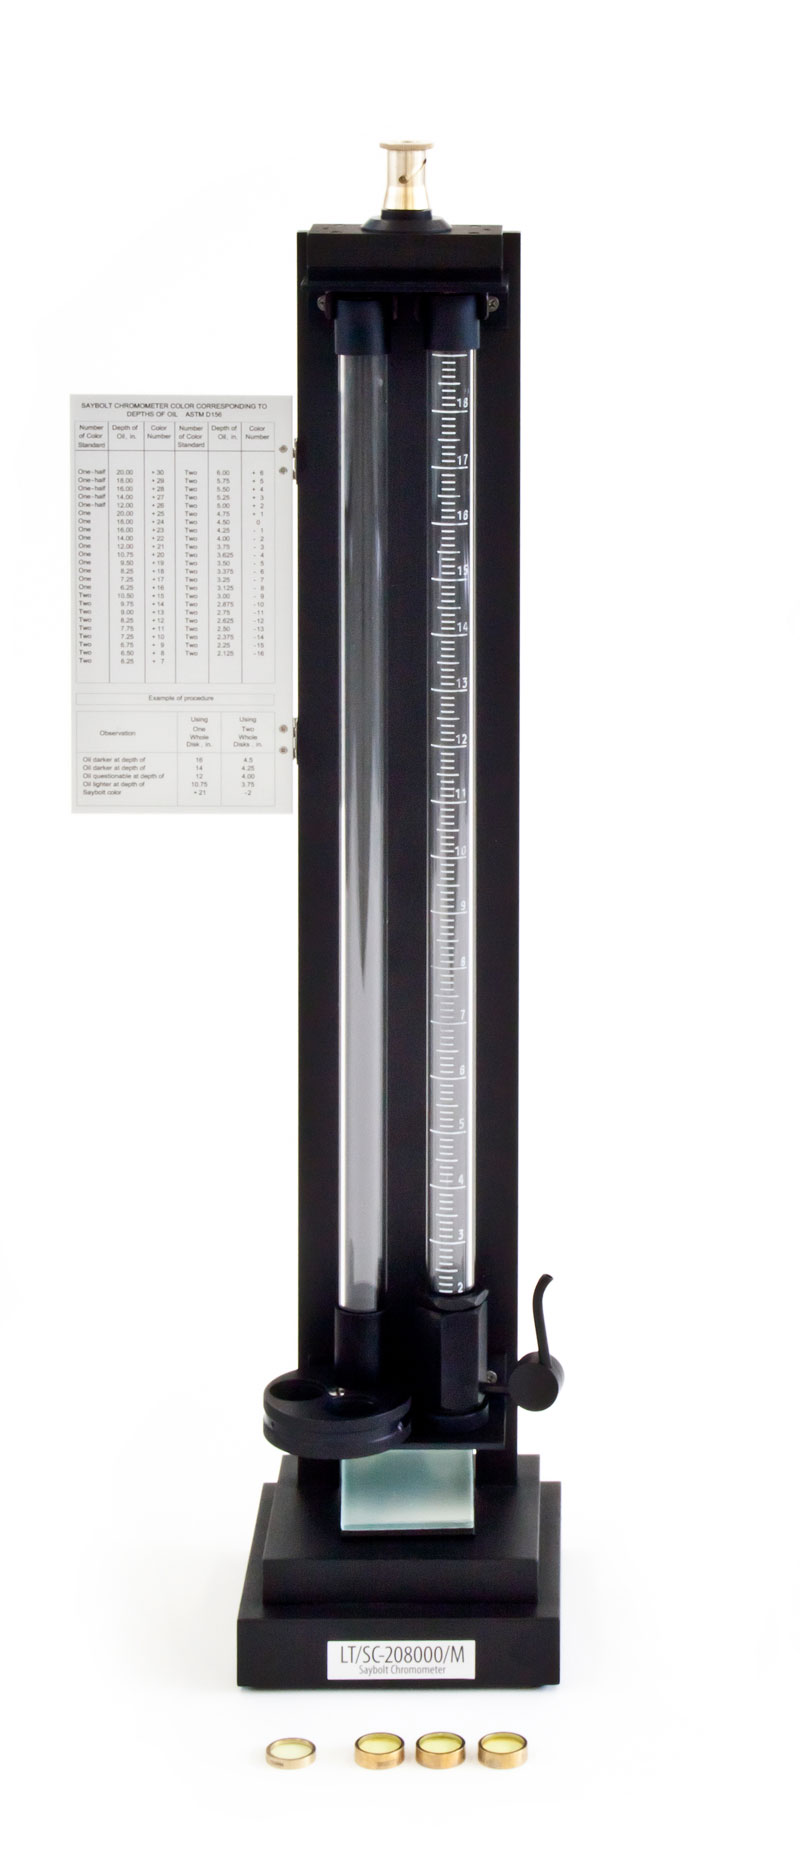 LT/SC-208000/M: Saybolt Chromometer